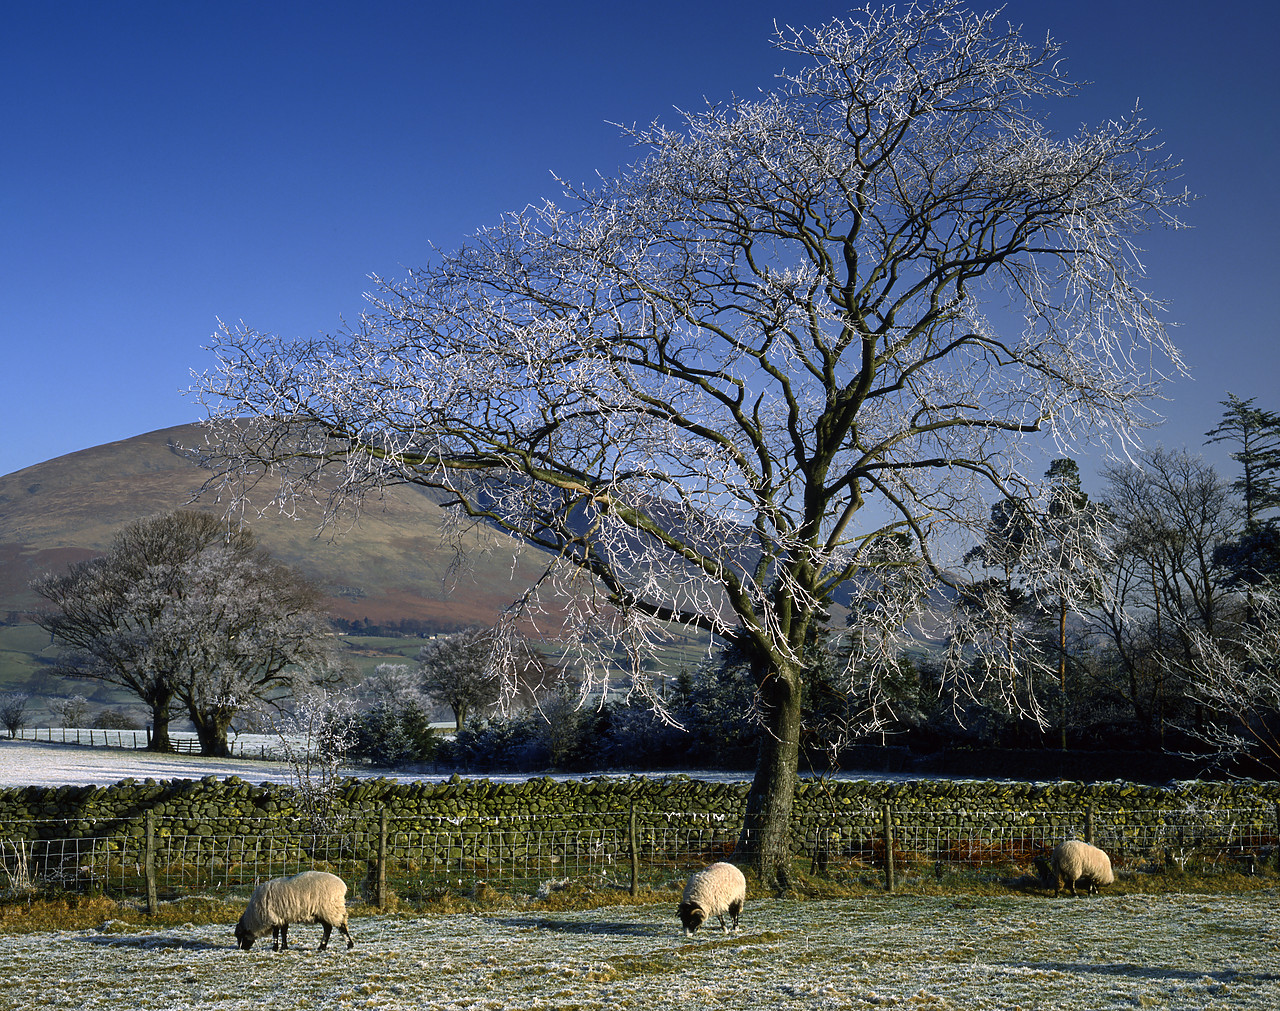 #923892-1 - Grazing Sheep in Hoar Frost, near Keswick, Cumbria, England